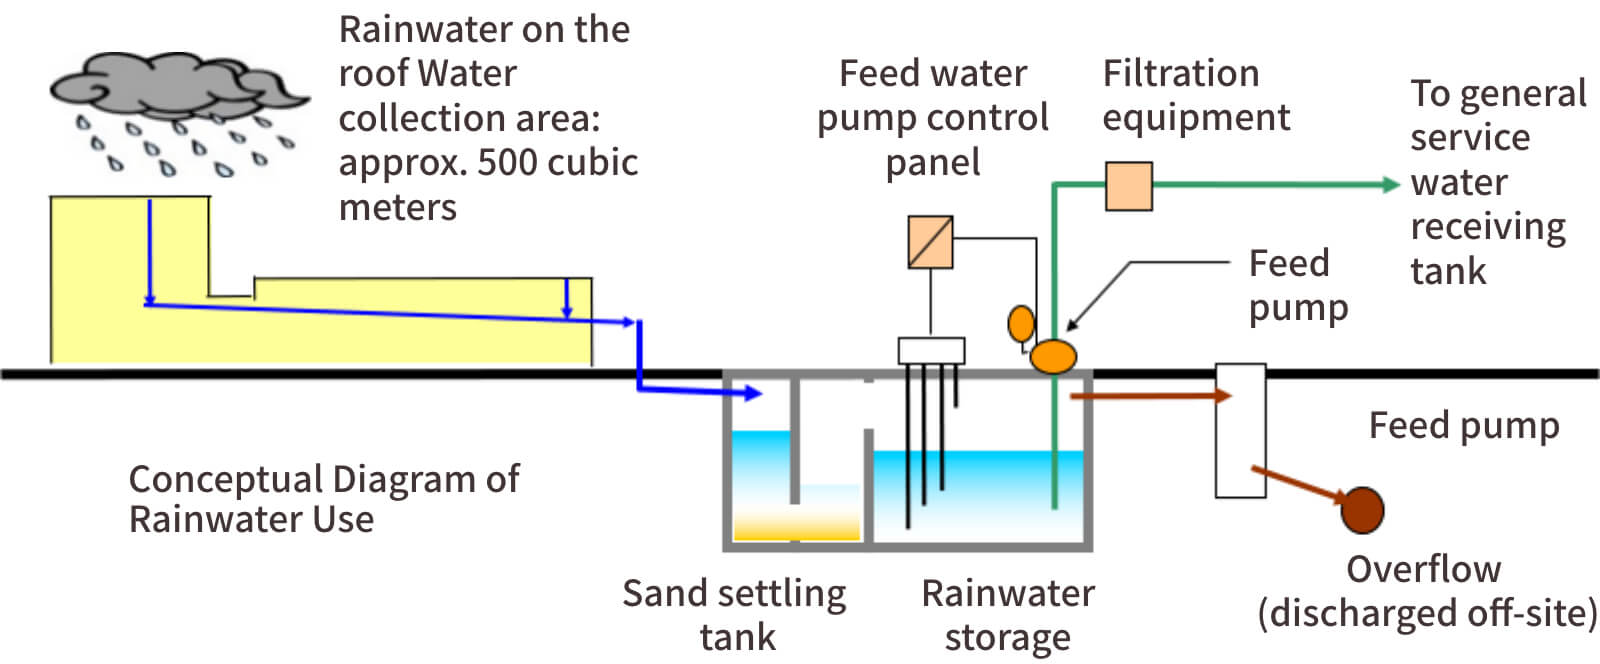 Rainwater utilization facilities